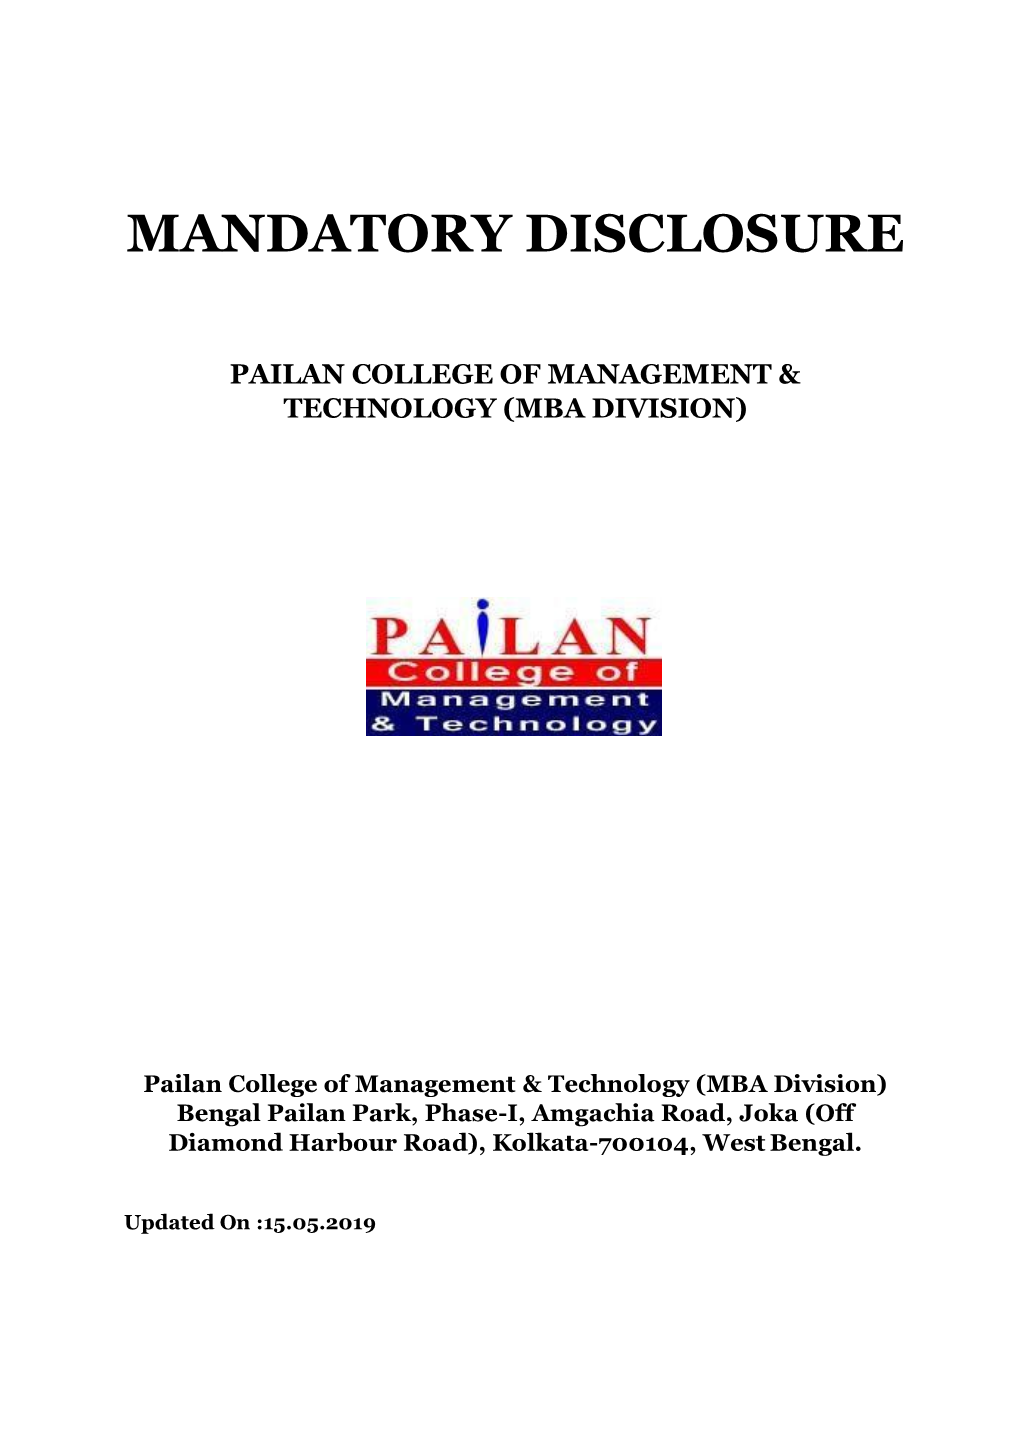 Mandatory Disclosure Pailan College of Management & Technology